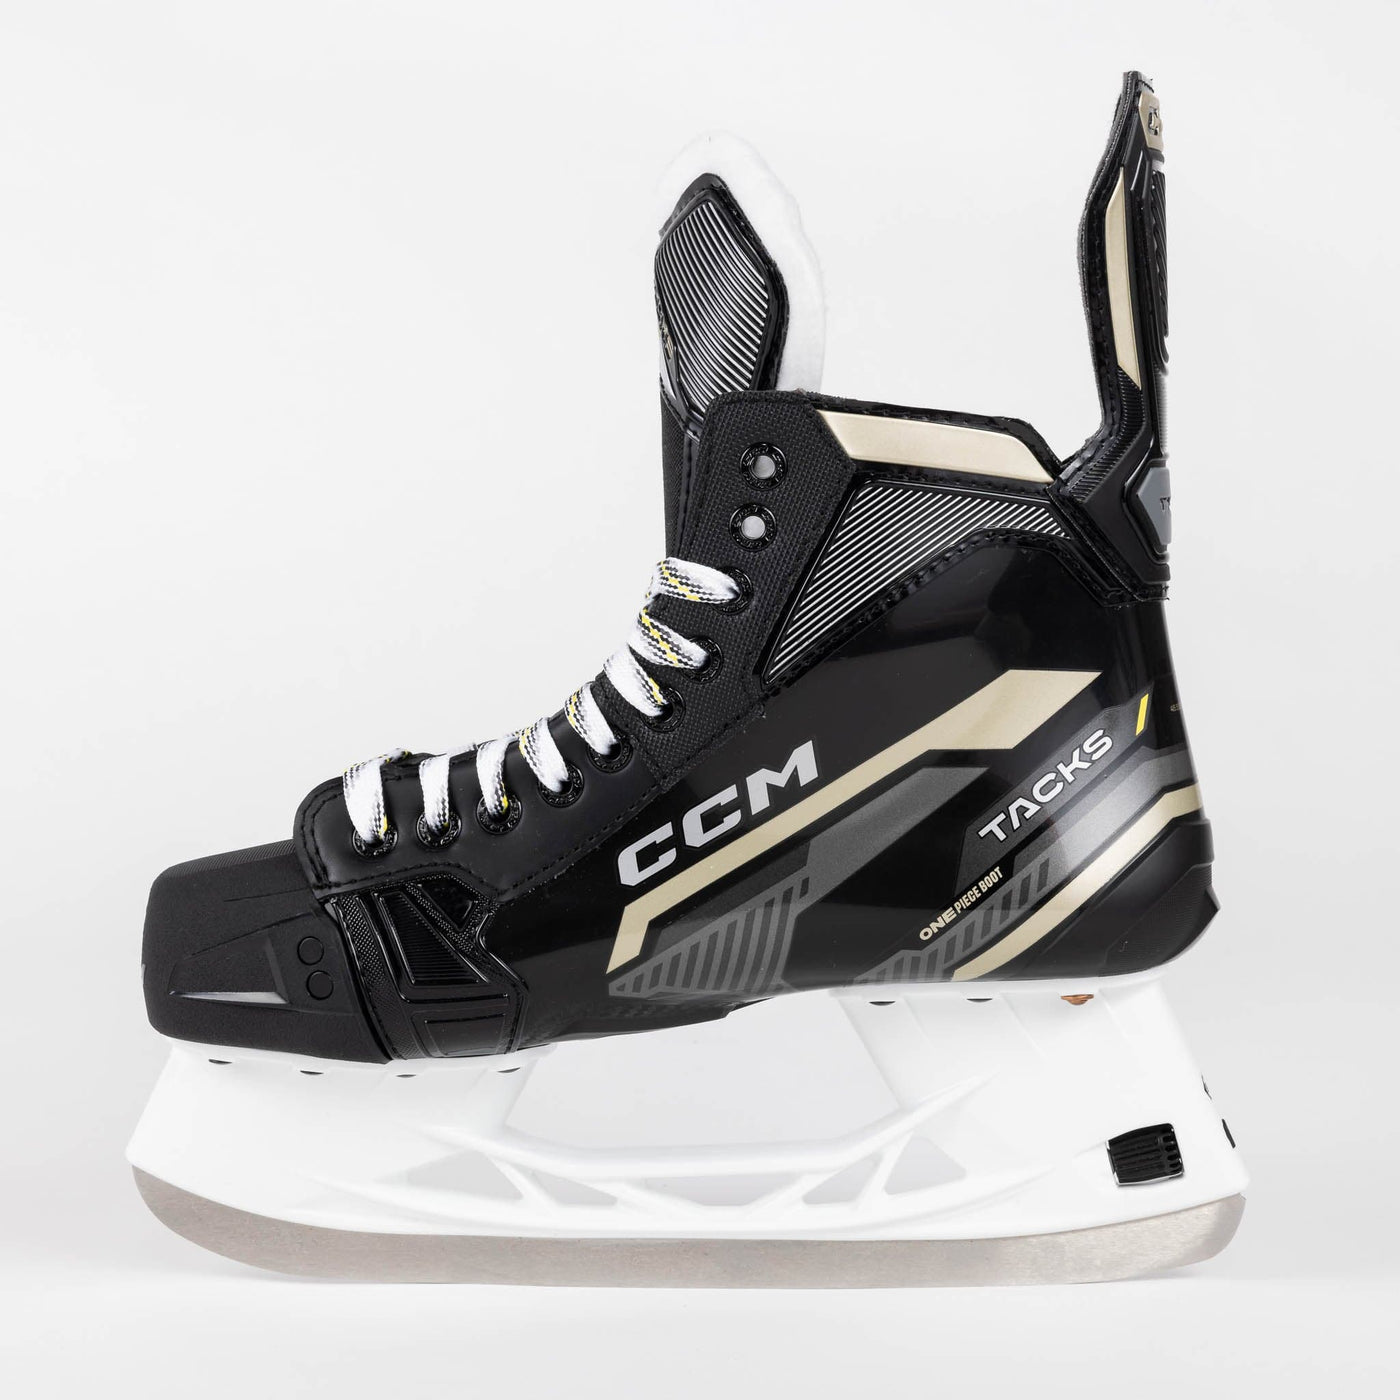 CCM Tacks AS570 Intermediate Hockey Skates - The Hockey Shop Source For Sports